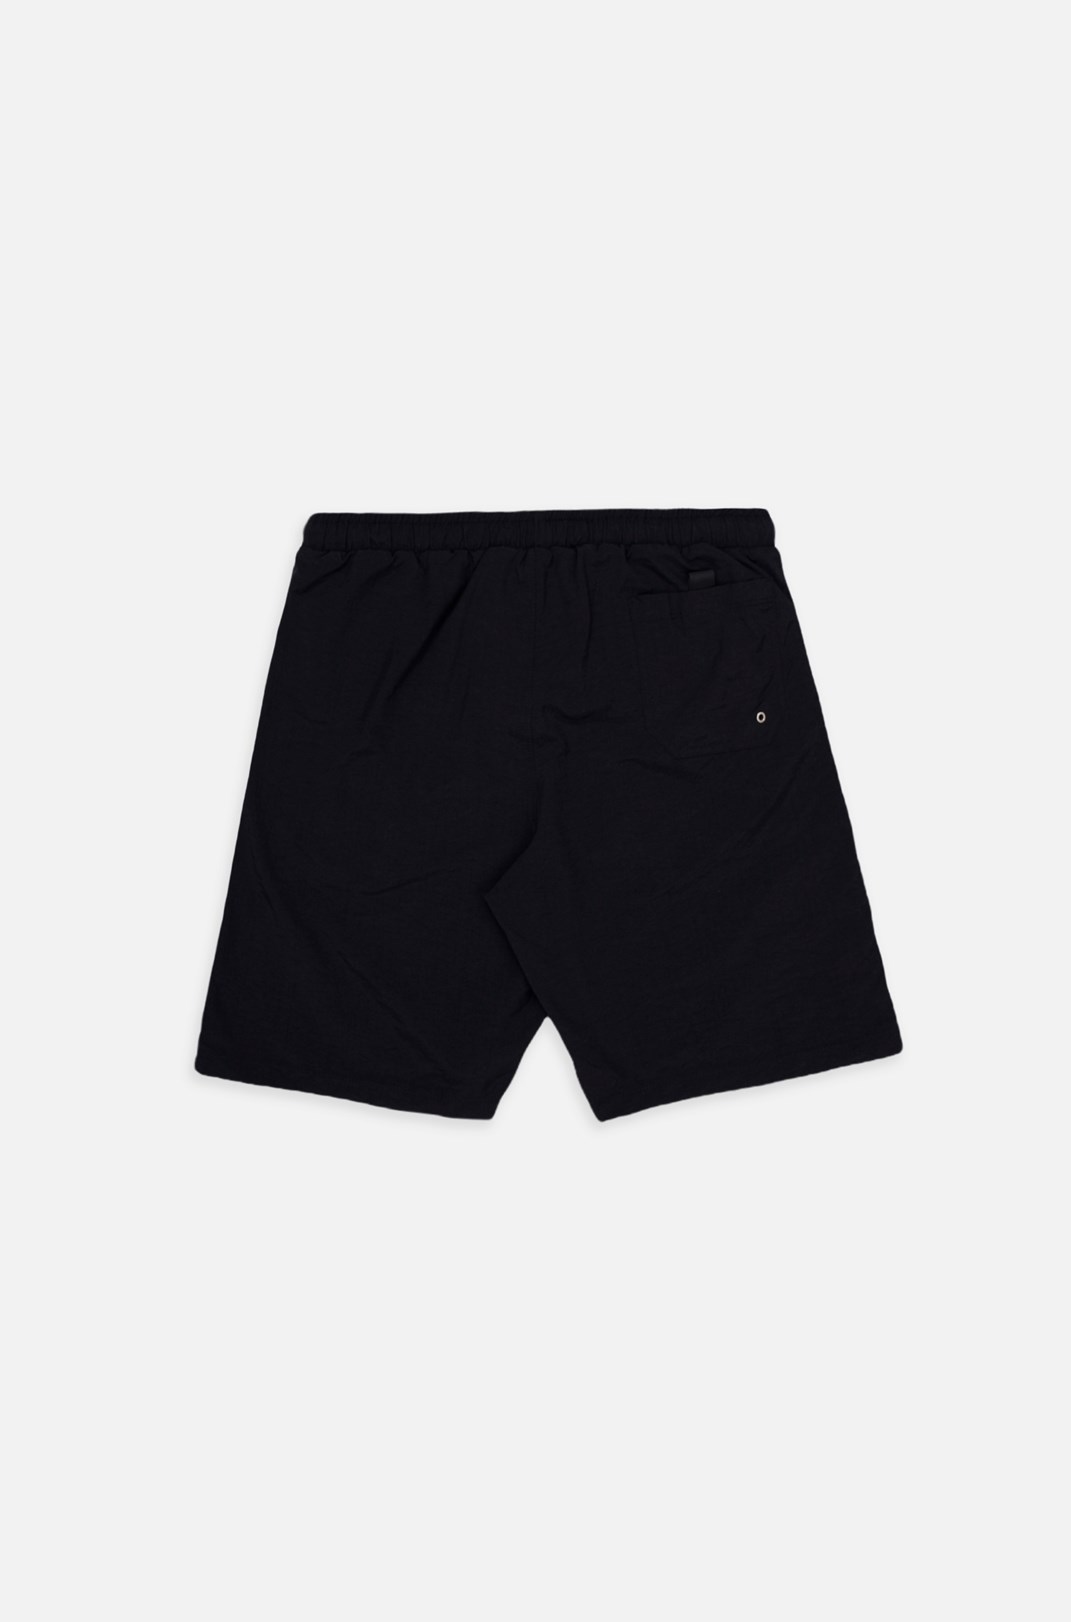 Shorts Approve Basic 9in Preto